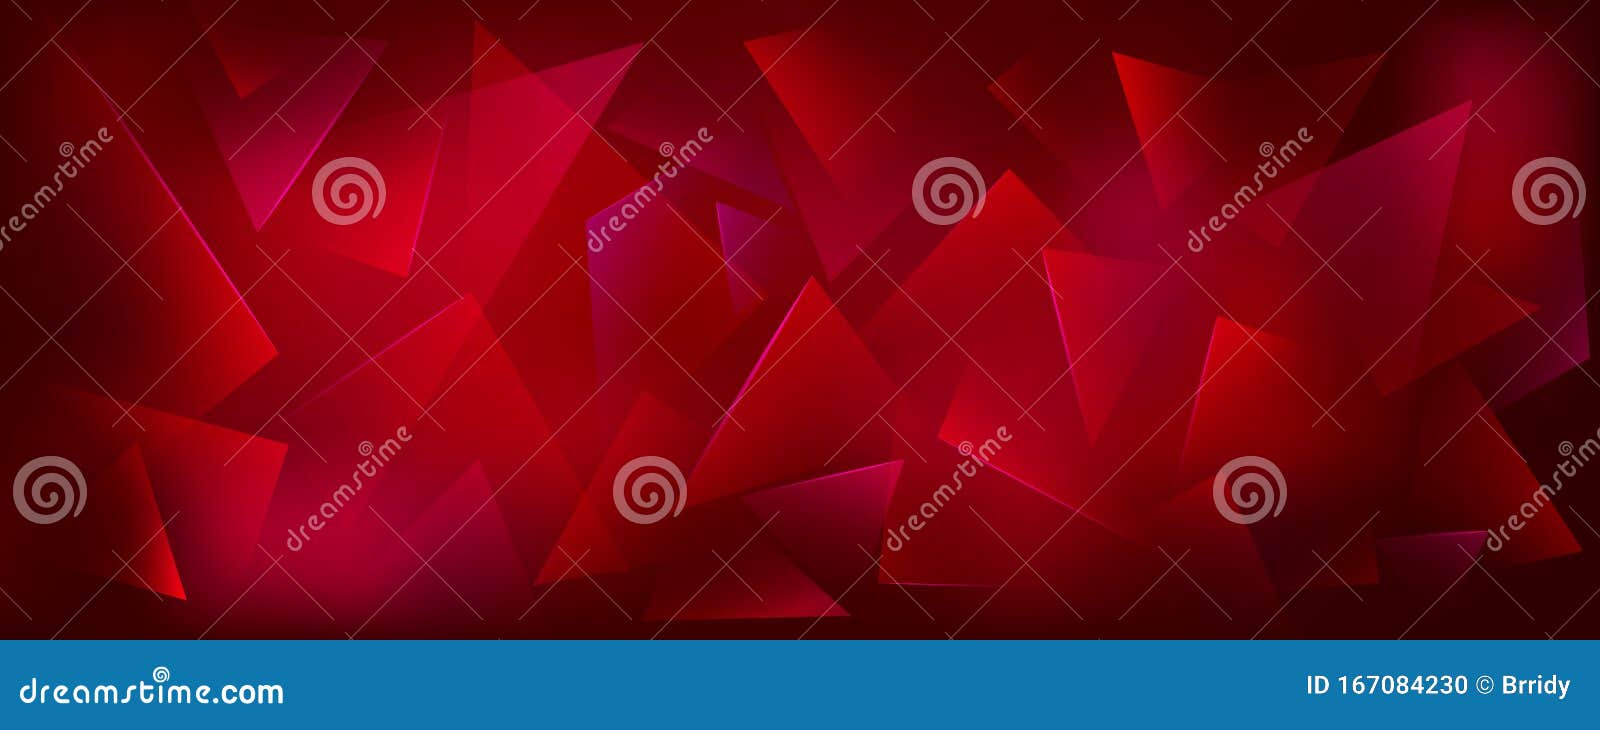 Vector Broken Glass Red Background Ruby Decorative Horizontal Banner